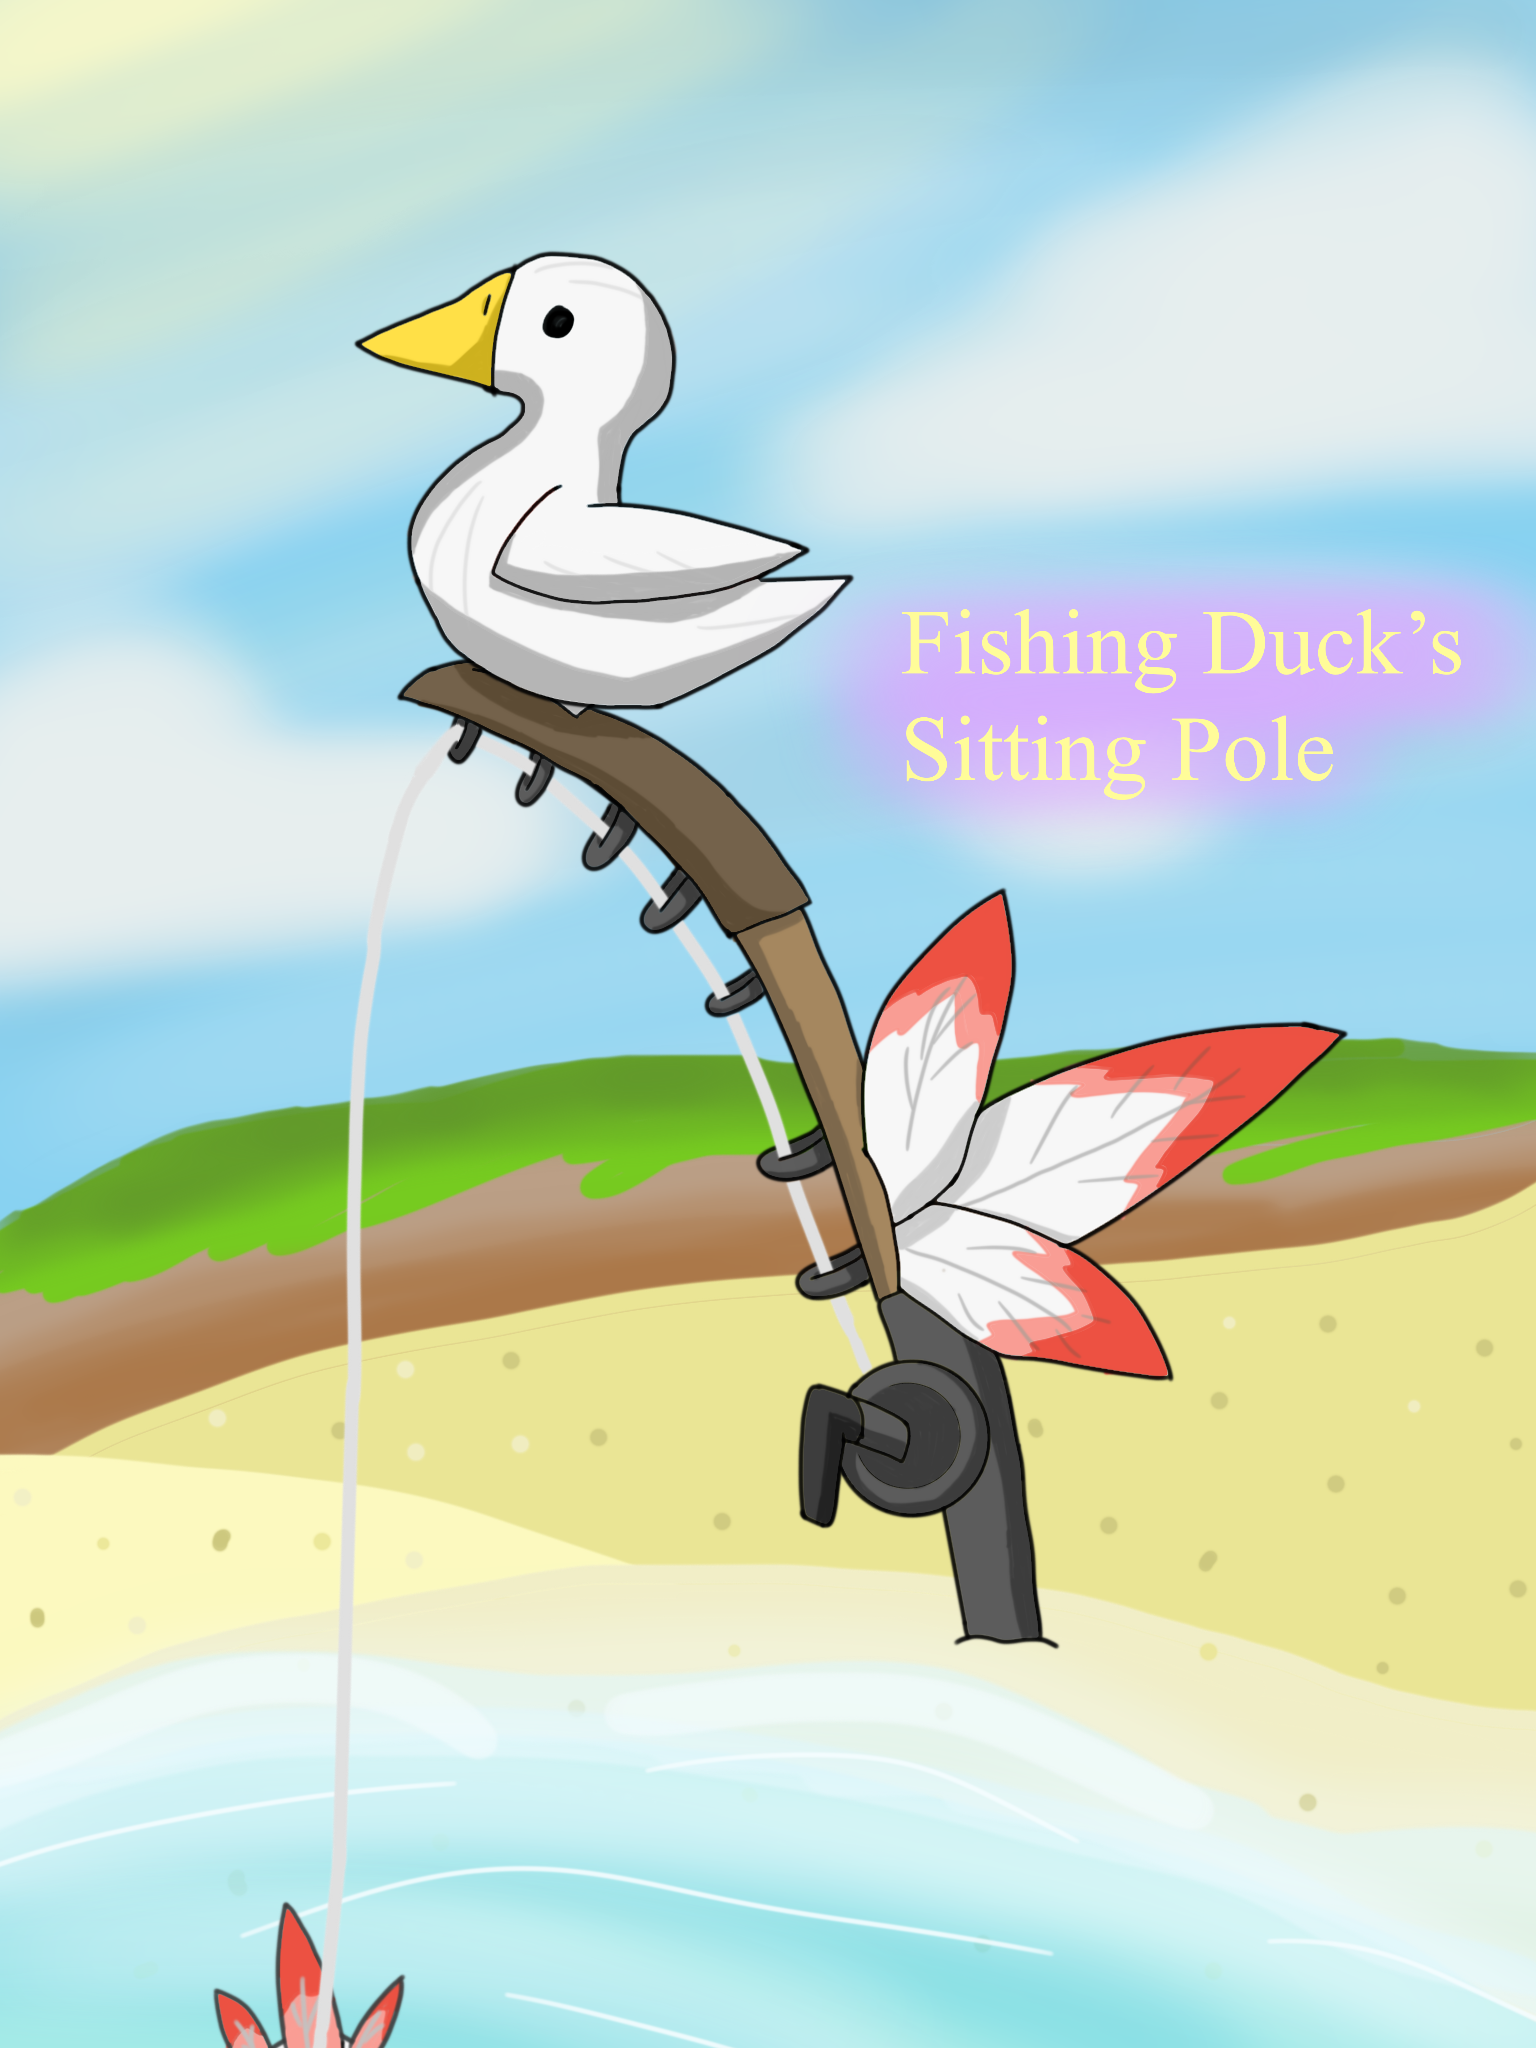 Fishing Duck's Sitting Pole by cutechickdDraws on DeviantArt